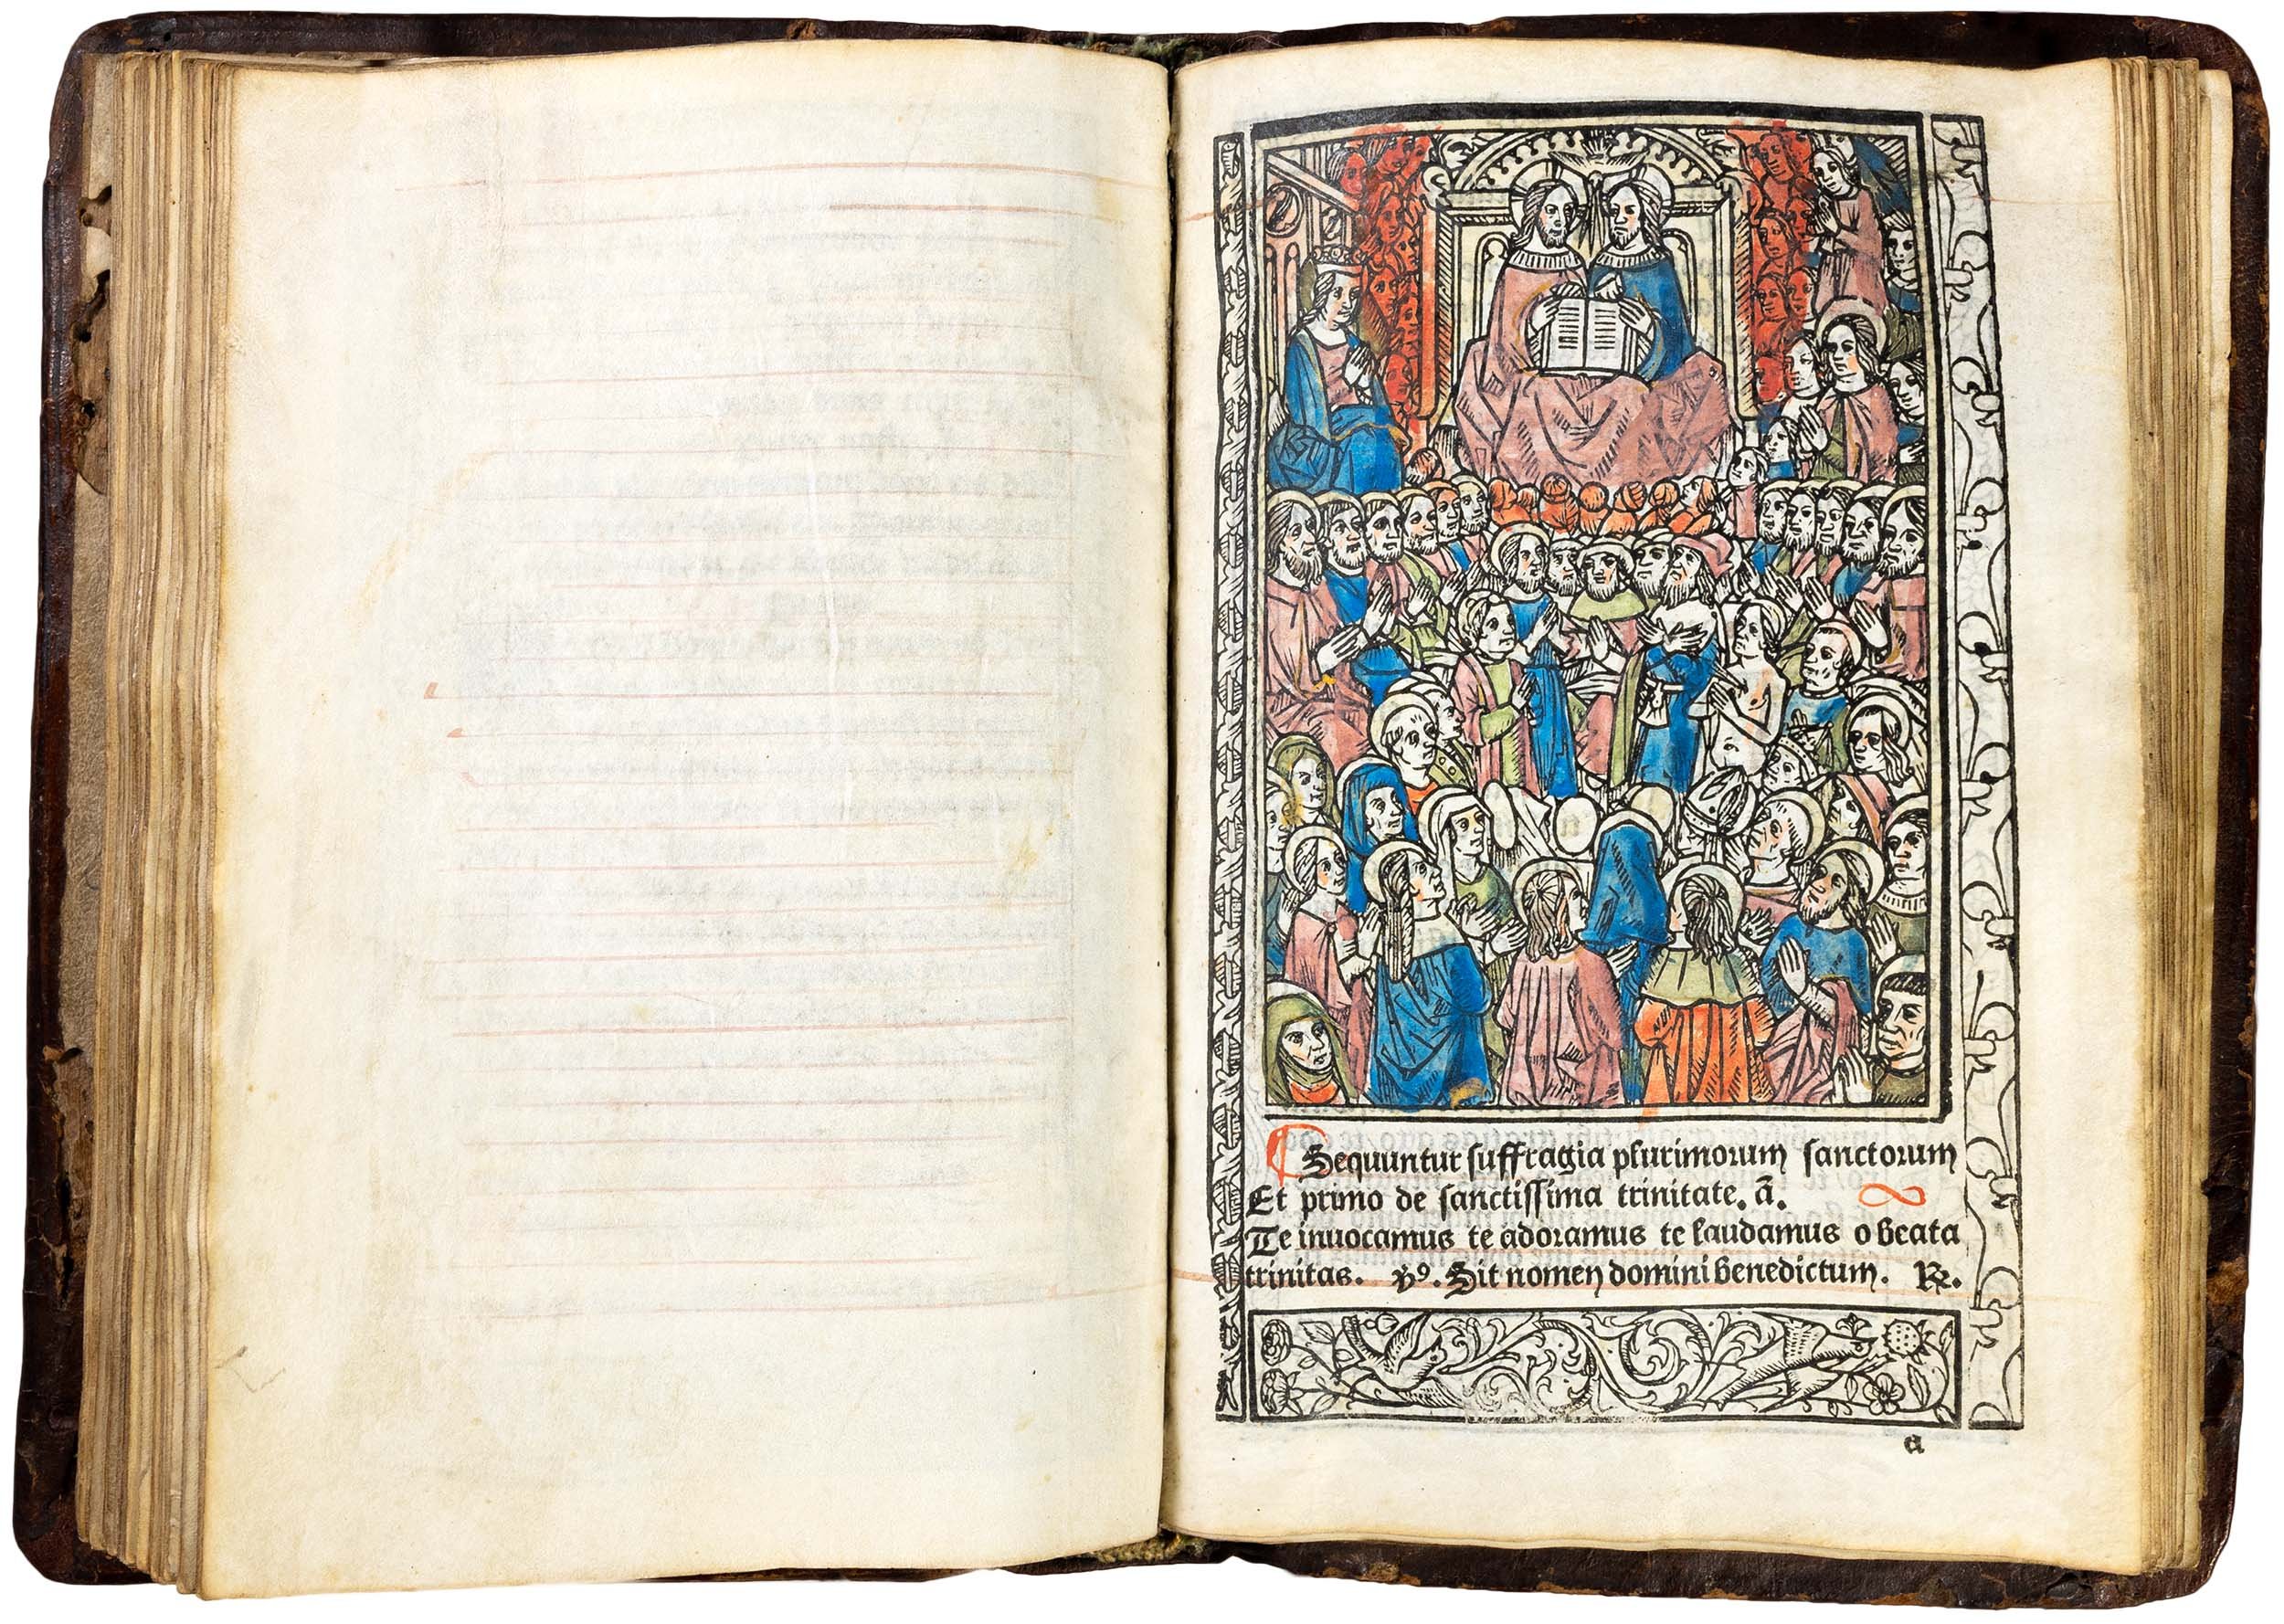 Printed-book-of-hours-chalon-sur-saone-dupre-1488-illuminated-vellum-horae-bmv-75.jpg